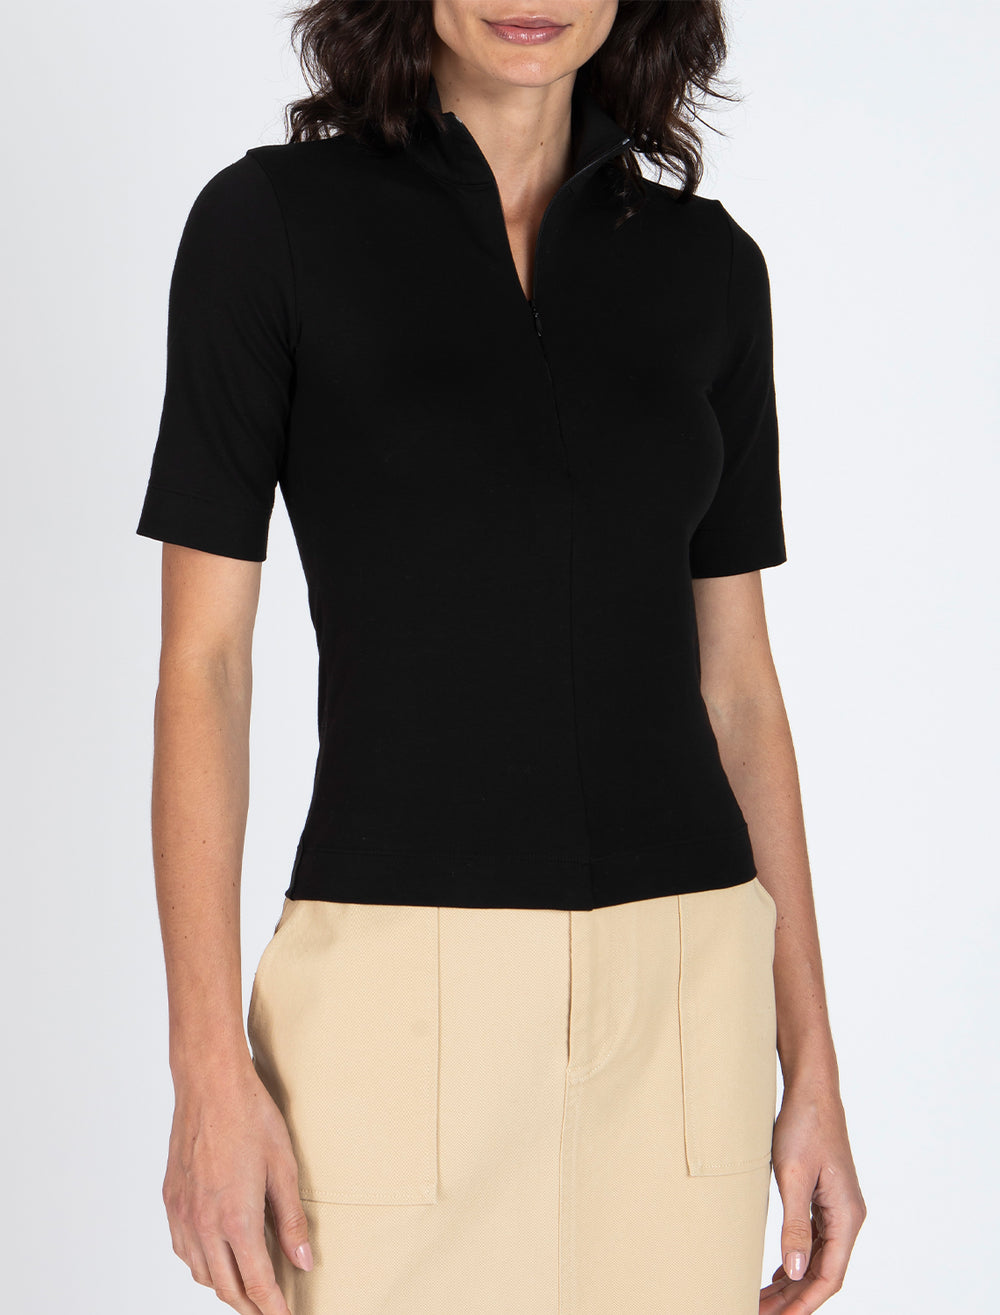 Model wearing ATM's pima cotton zip front top in black.